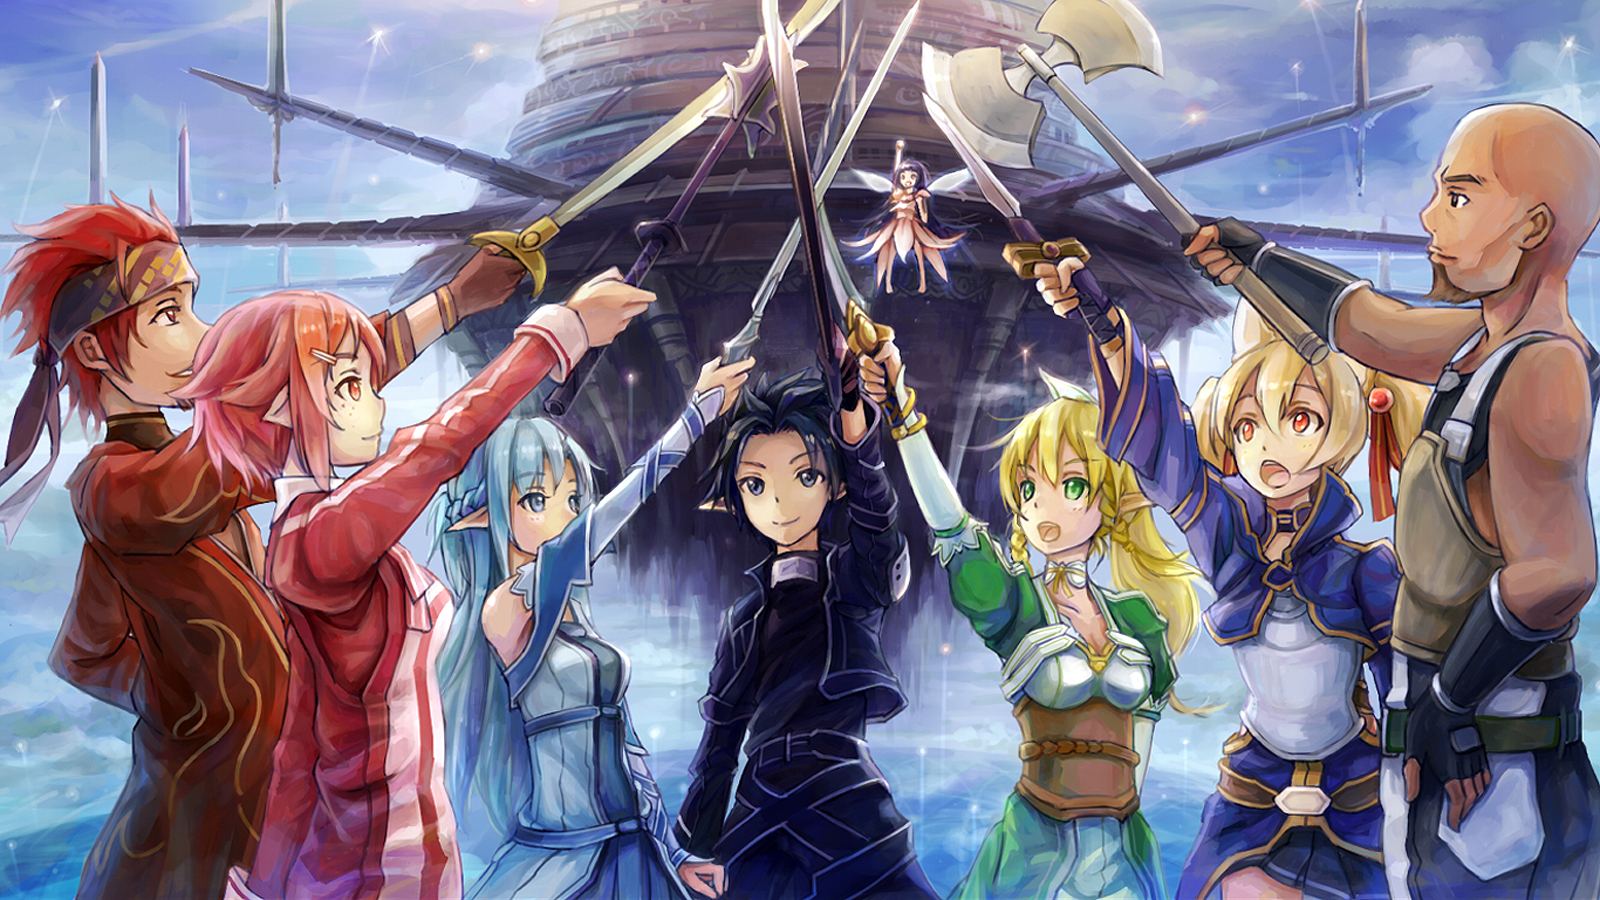 Download wallpaper from anime Sword Art Online II with tags: Picture, Asuna Yuuki, Kirito, Sword Art Online, Yui, Agil, Klein, Lisbeth, Silica, Suguha Kirigaya